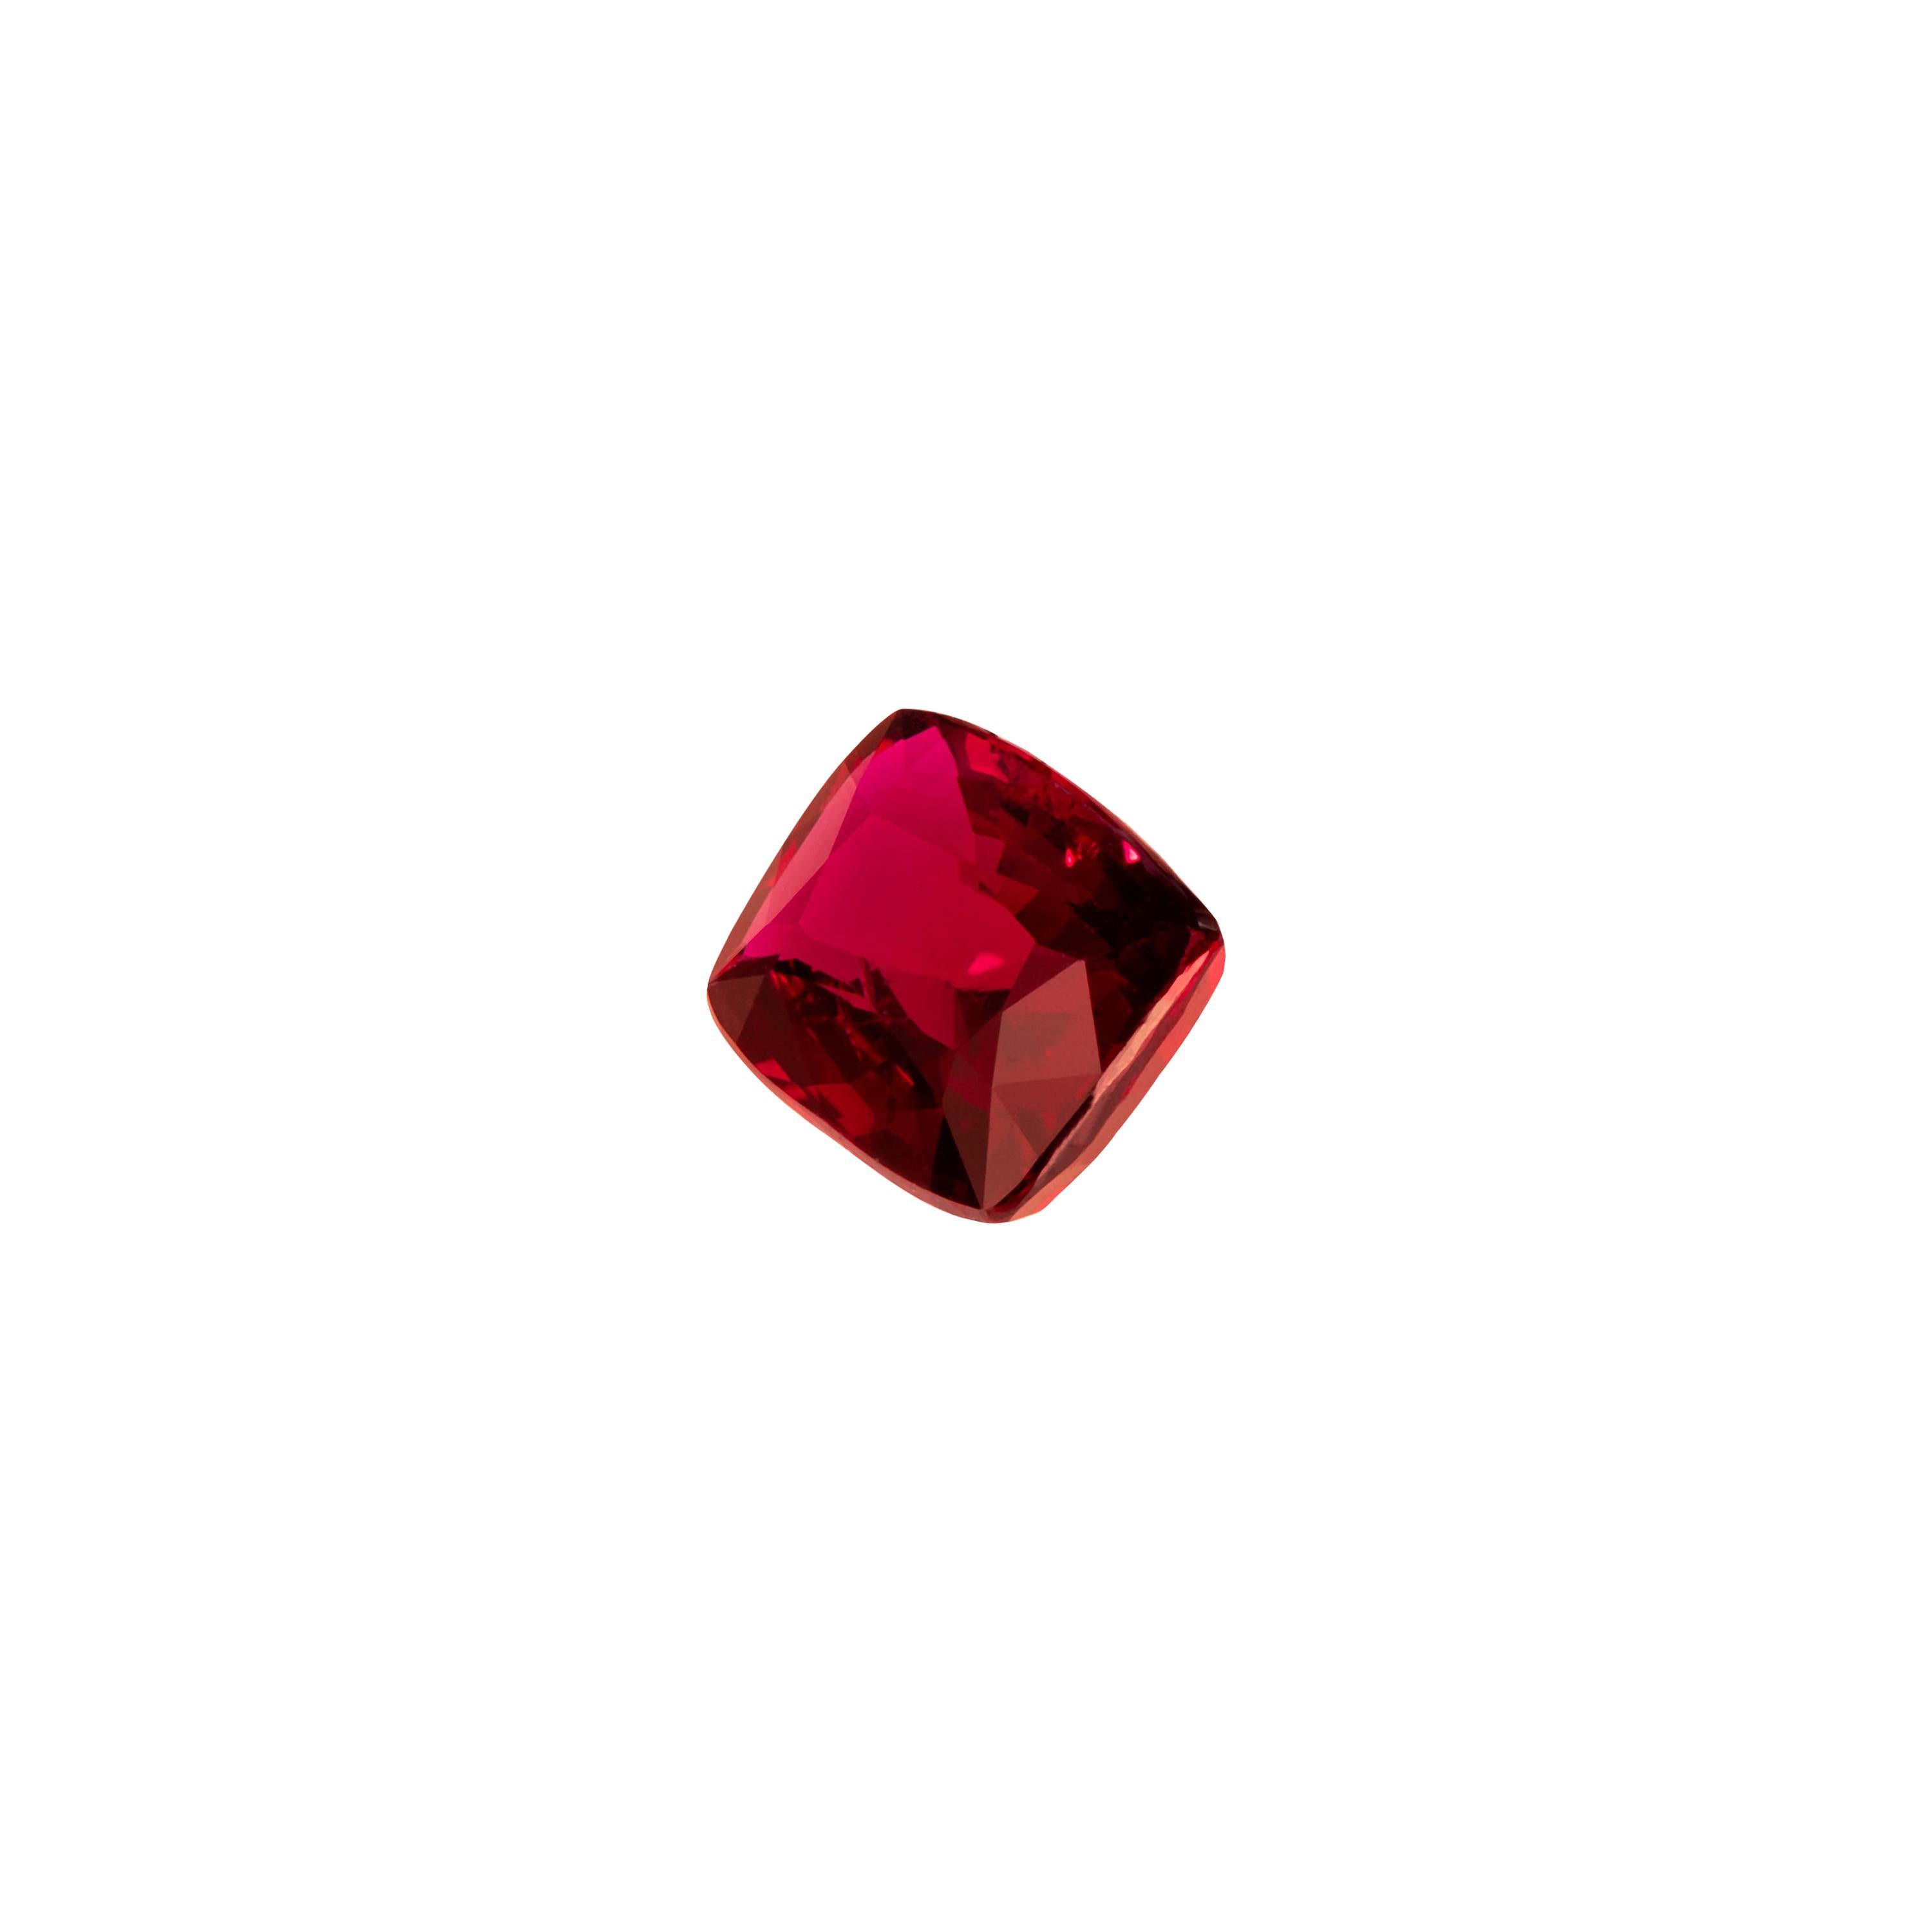 2.52 Carat Vivid Red Ruby, Mozambique, Unheated, Rectangular Cushion